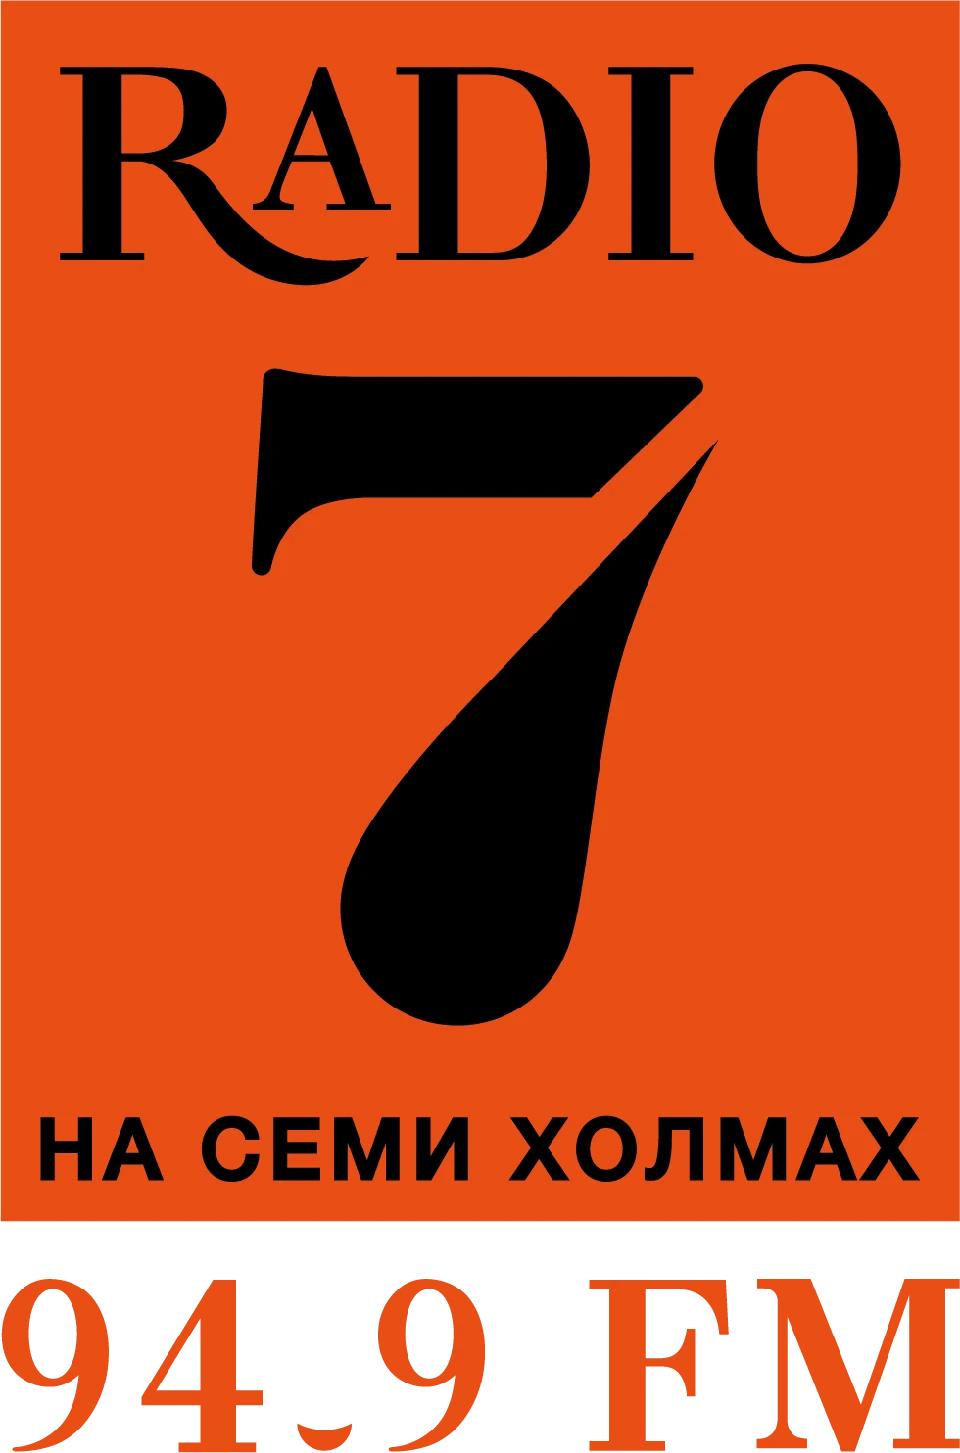 Радио семь сайт. Радио 7. Радио 7 логотип. Радио 7 на семи холмах. Логотип радиостанции на 7 холмах.